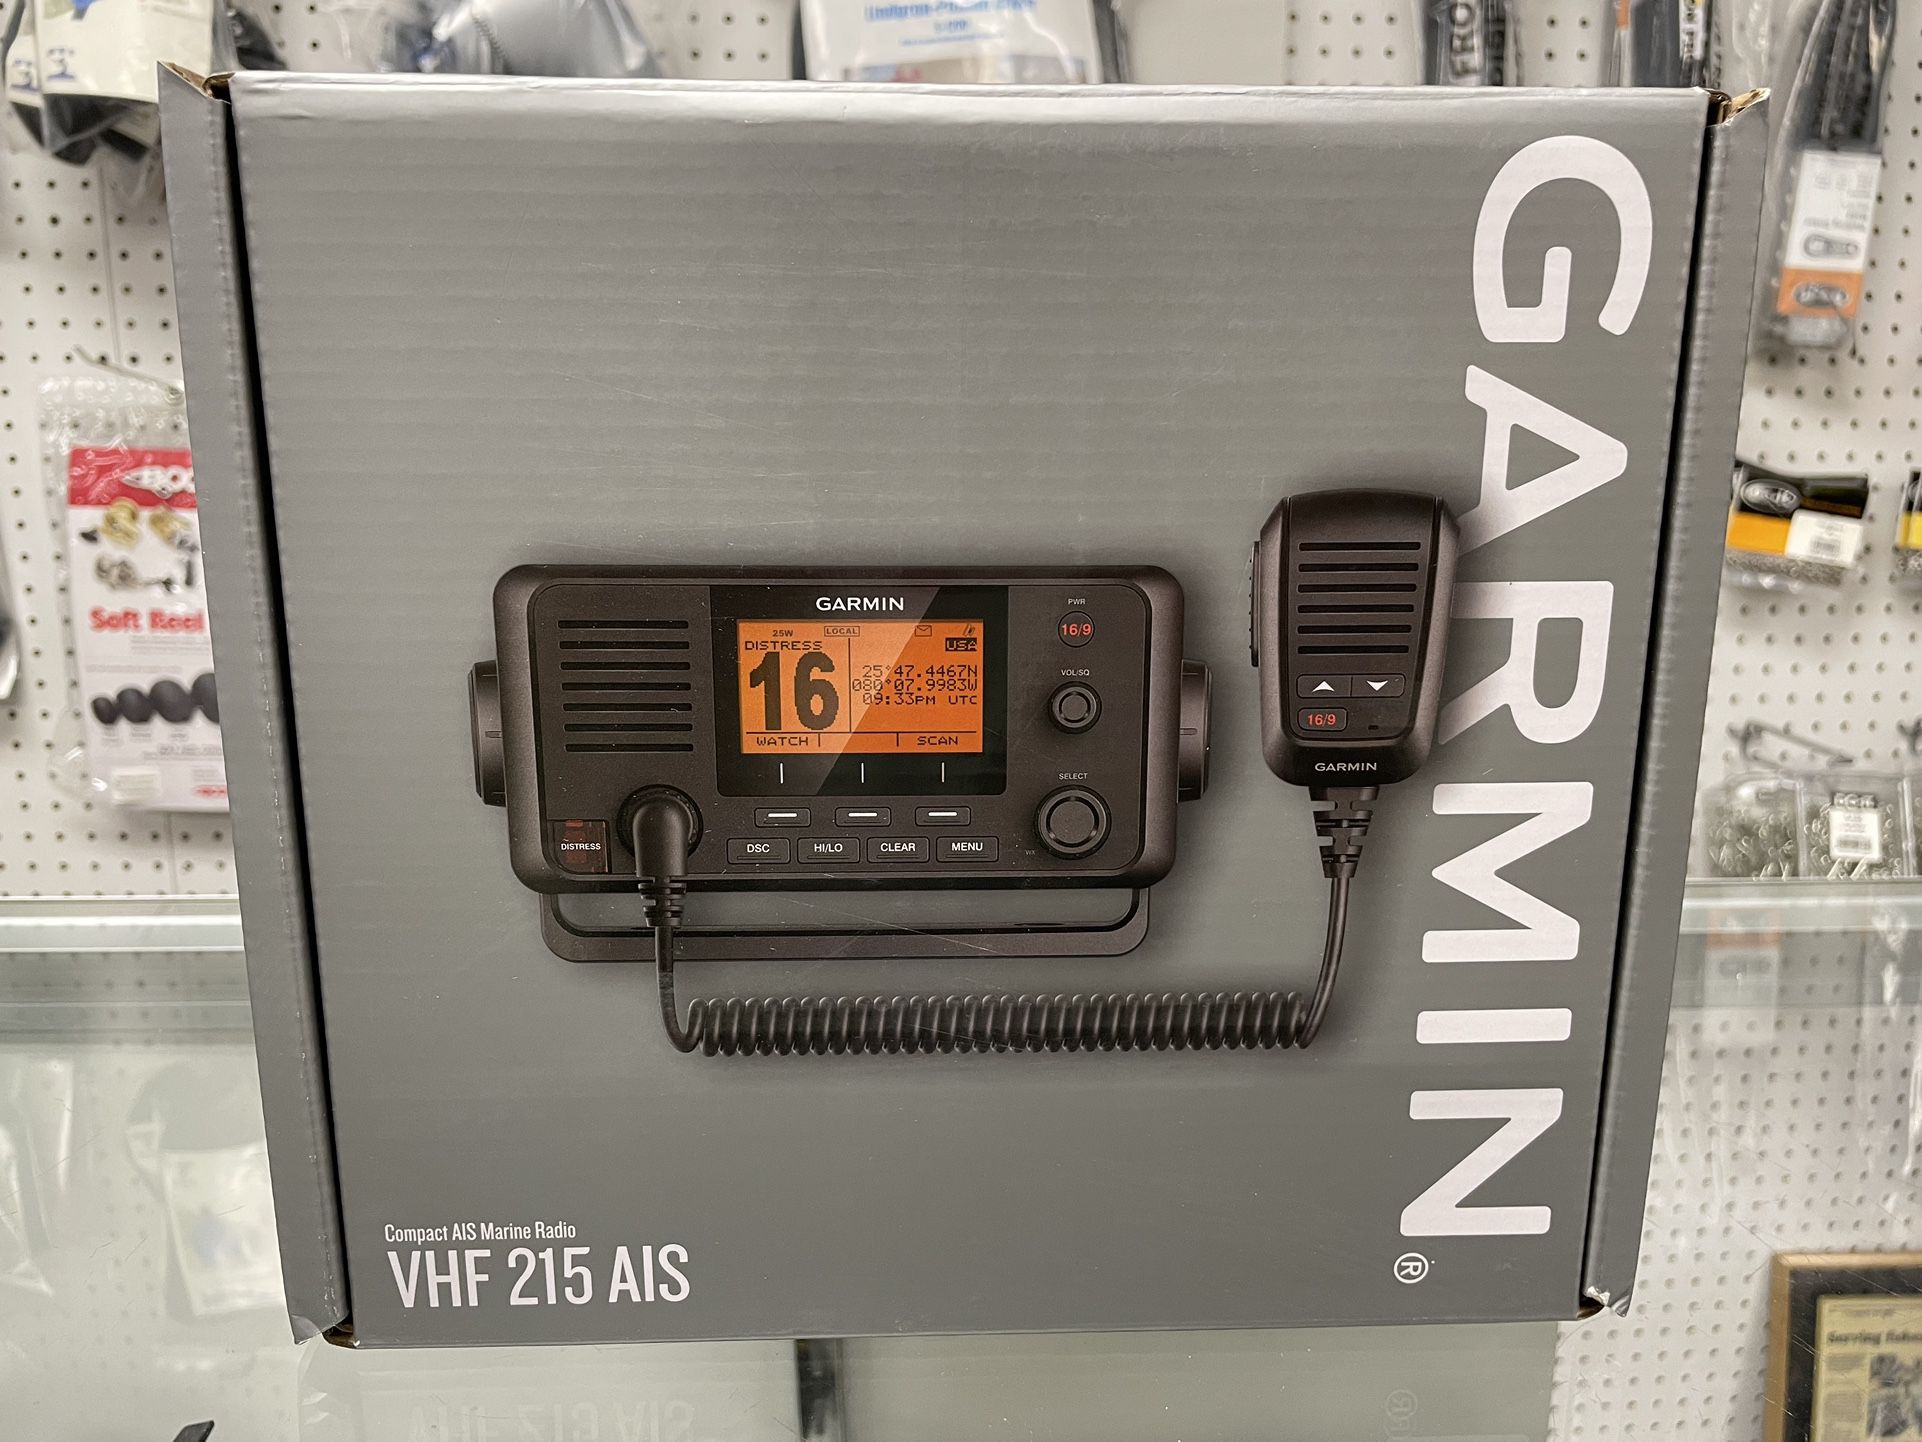 Garmin VHF 215 AIS Marine Radio - new for Sale Miami, FL - OfferUp